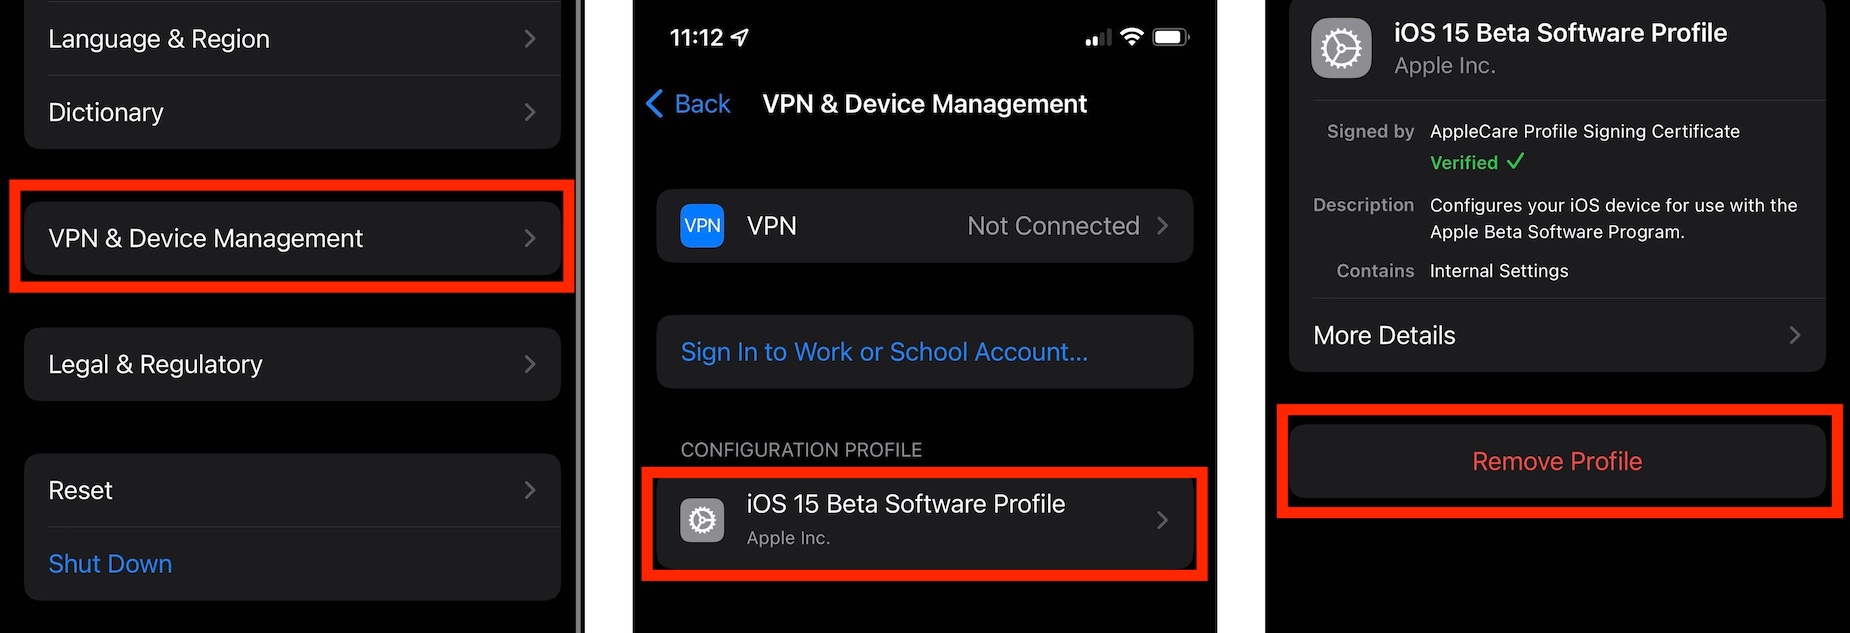 ios 15 beta 3 profile download